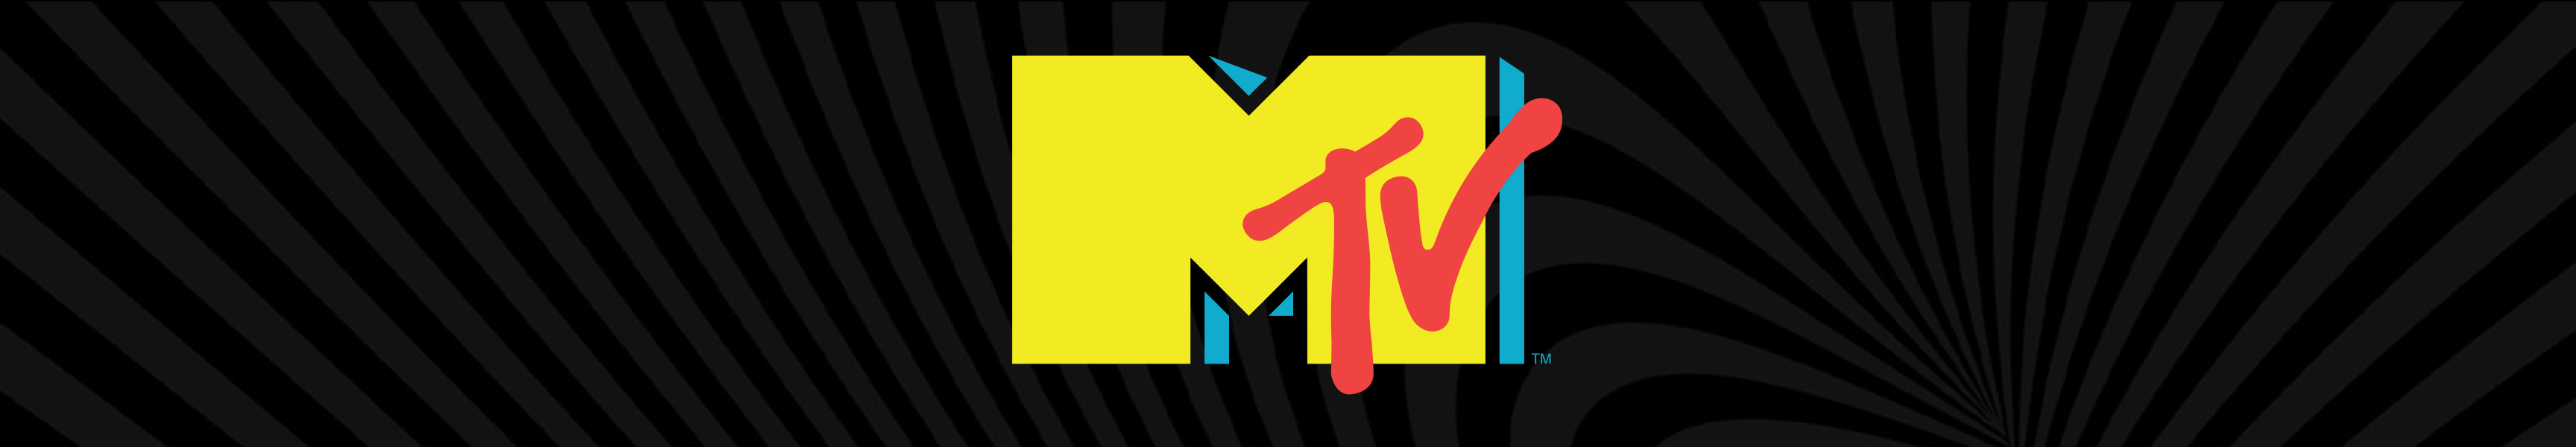 Leggings de MTV